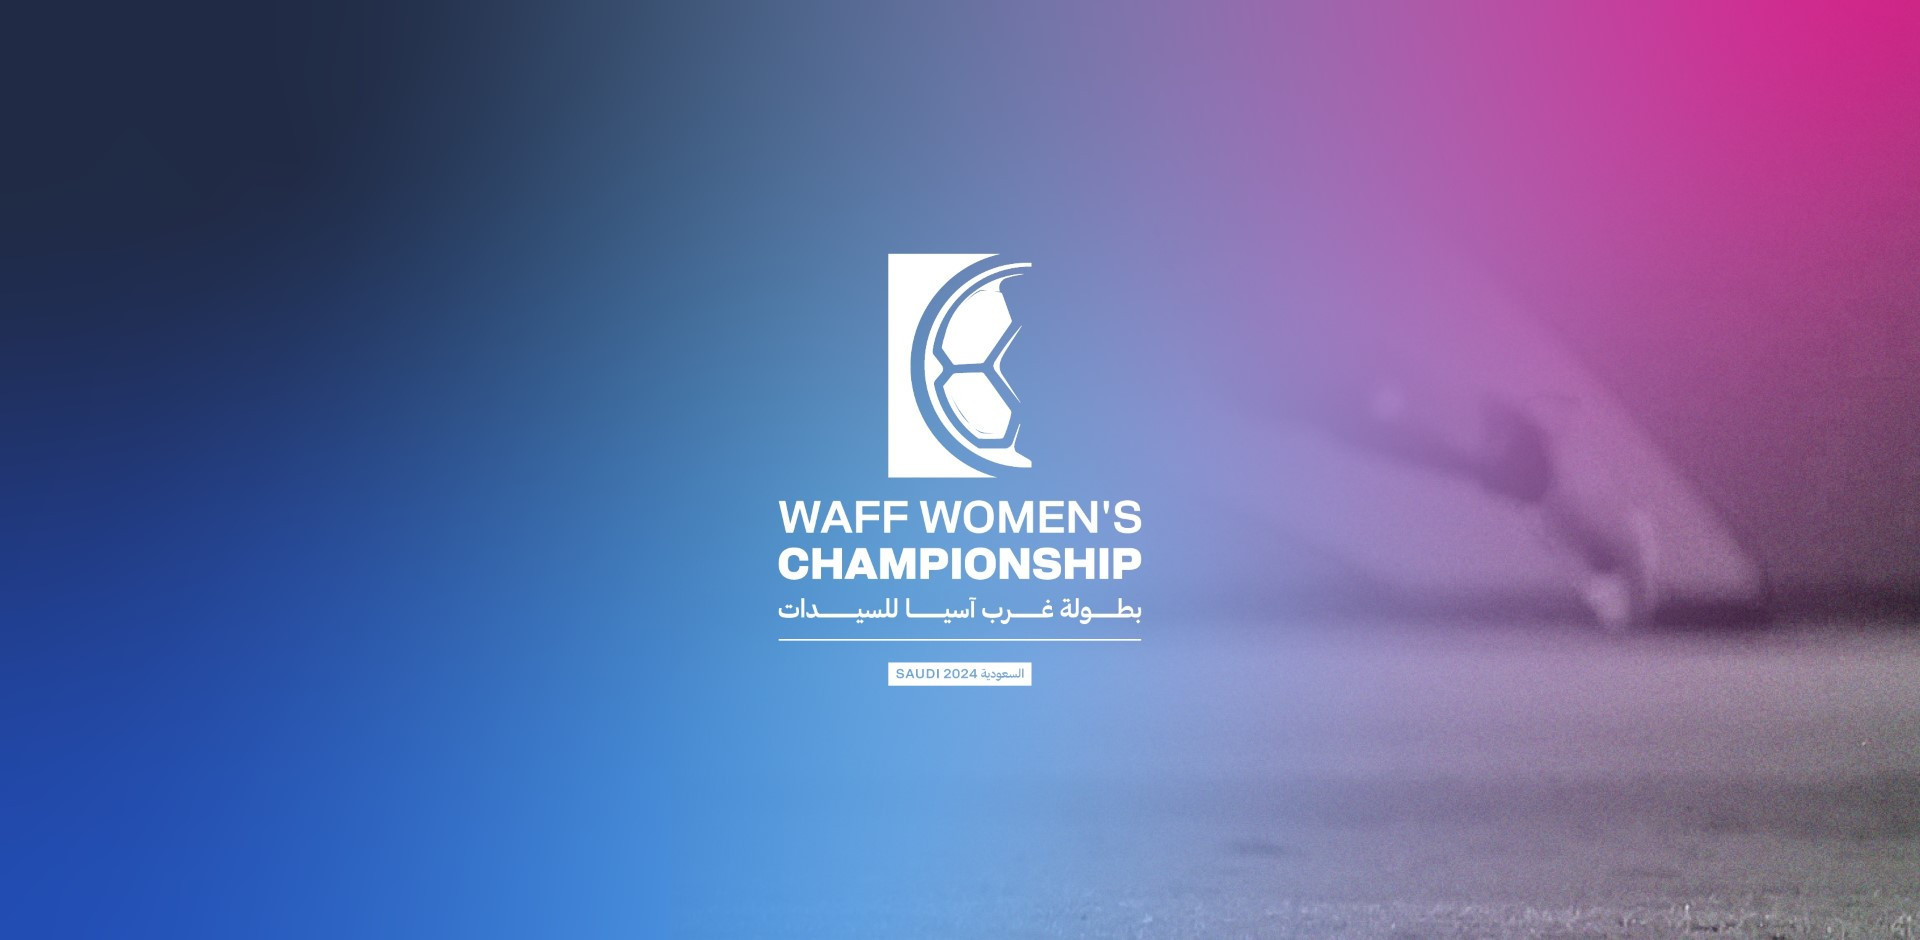 Saudi Arabia to host the 2024 AFC Women's Championship